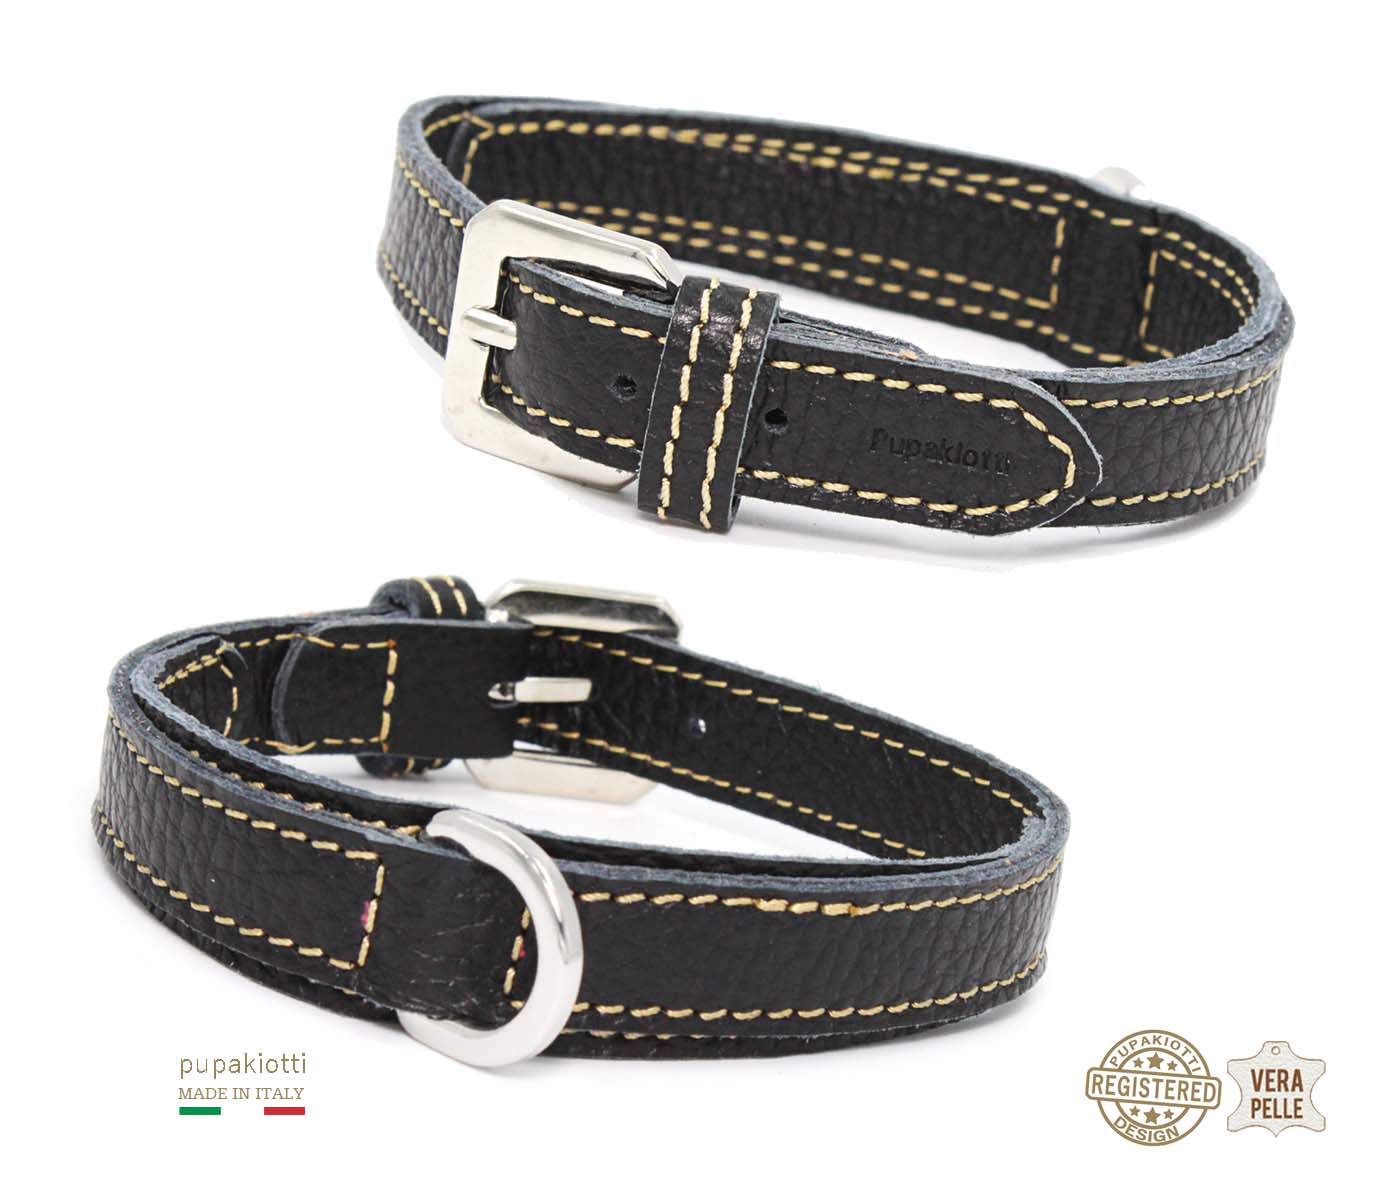 BASIC. Genuine leather collar for dog